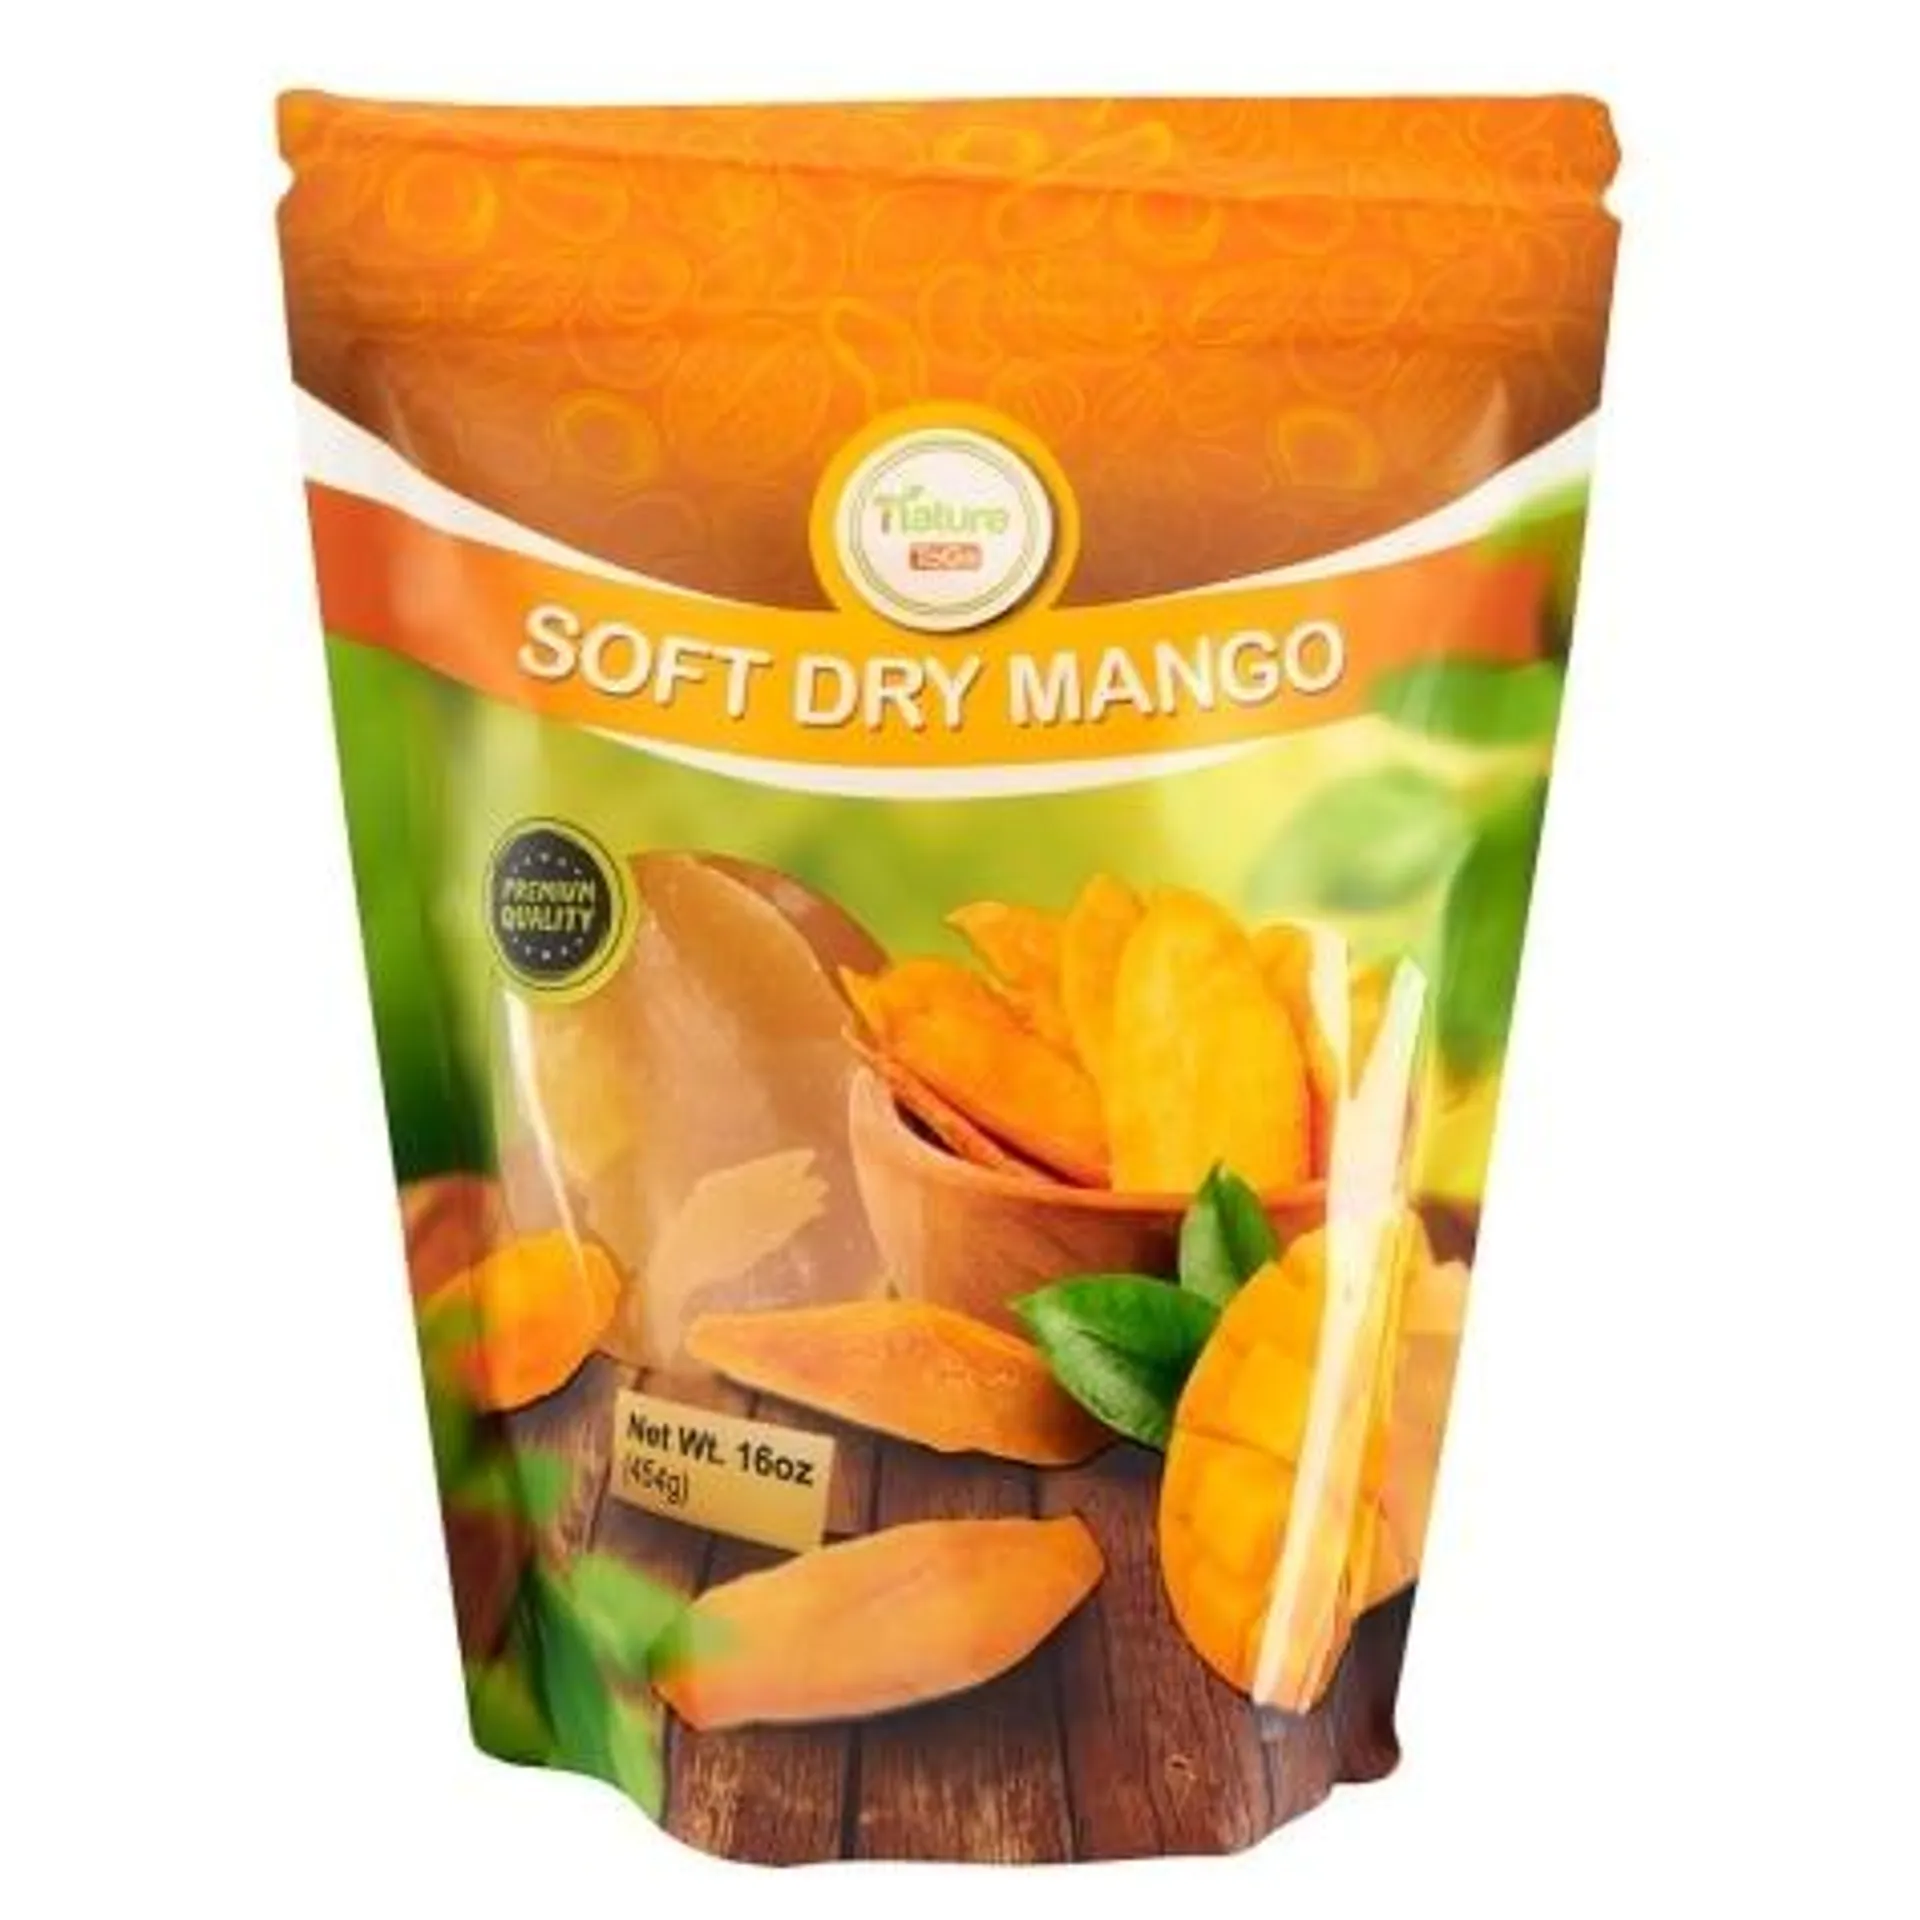 Soft Dry Mango, 16 oz